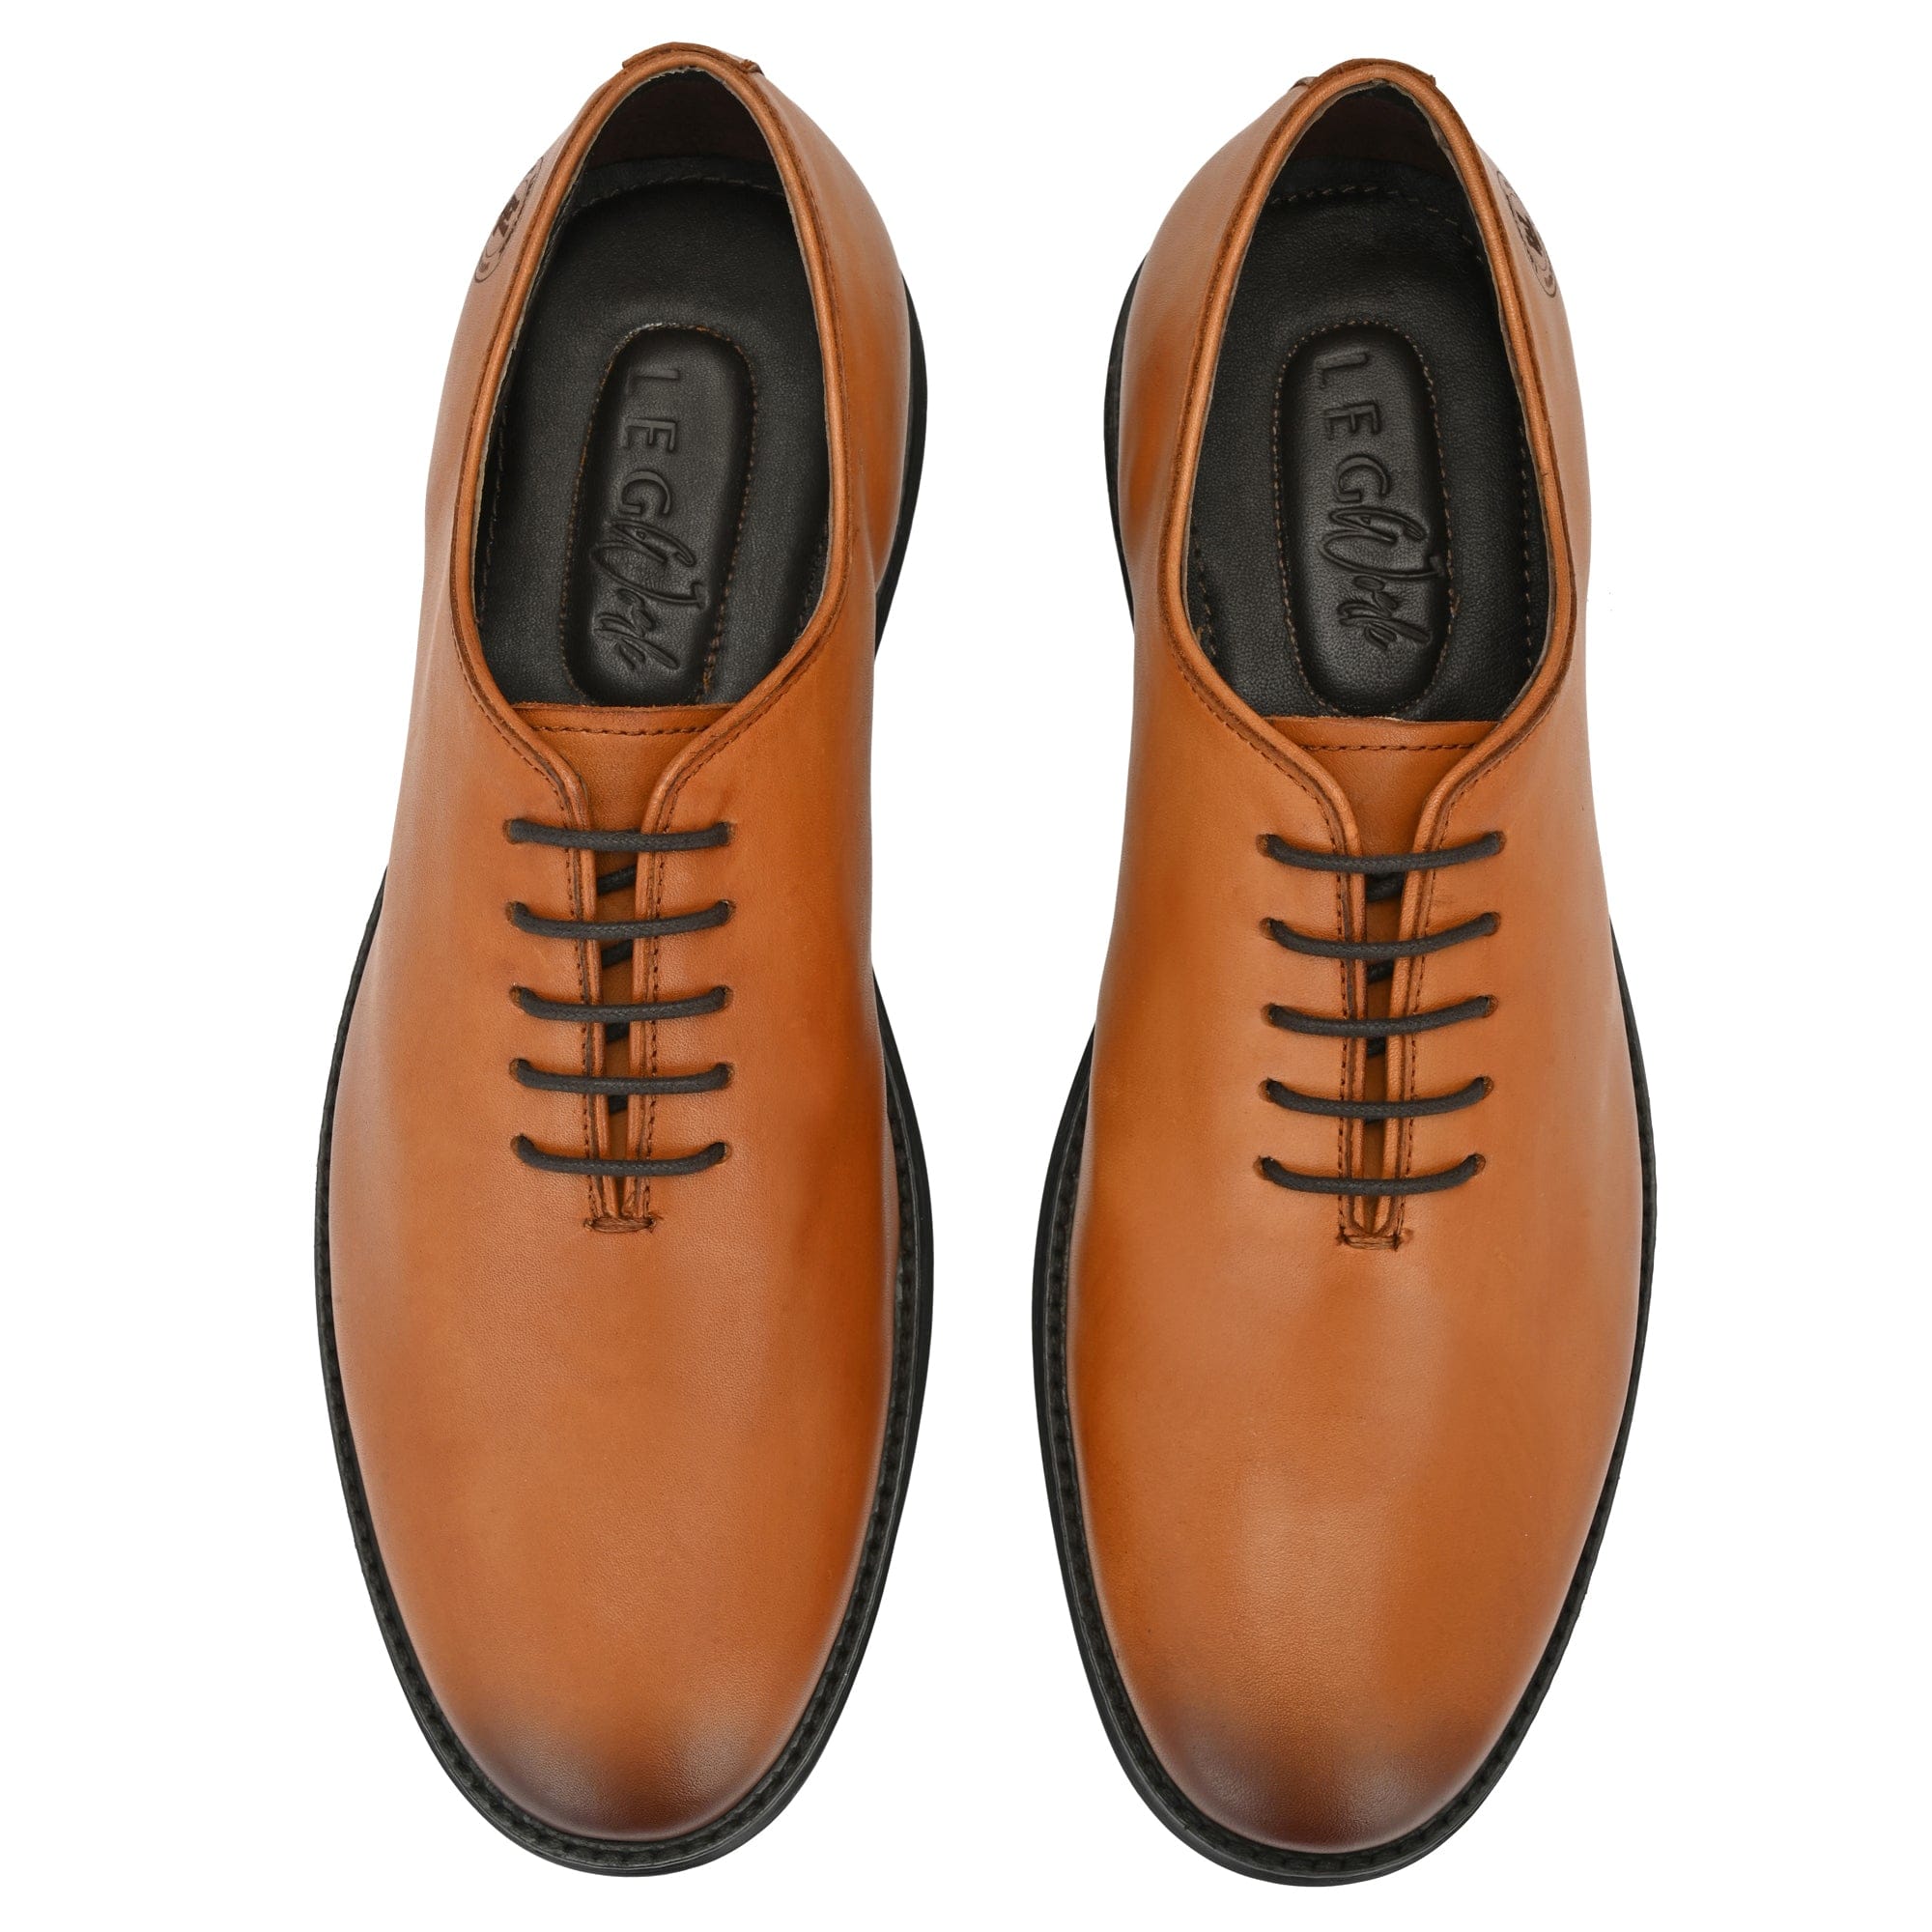 Legwork Wholecut Oxford 2.0 Tan Italian Leather Shoes